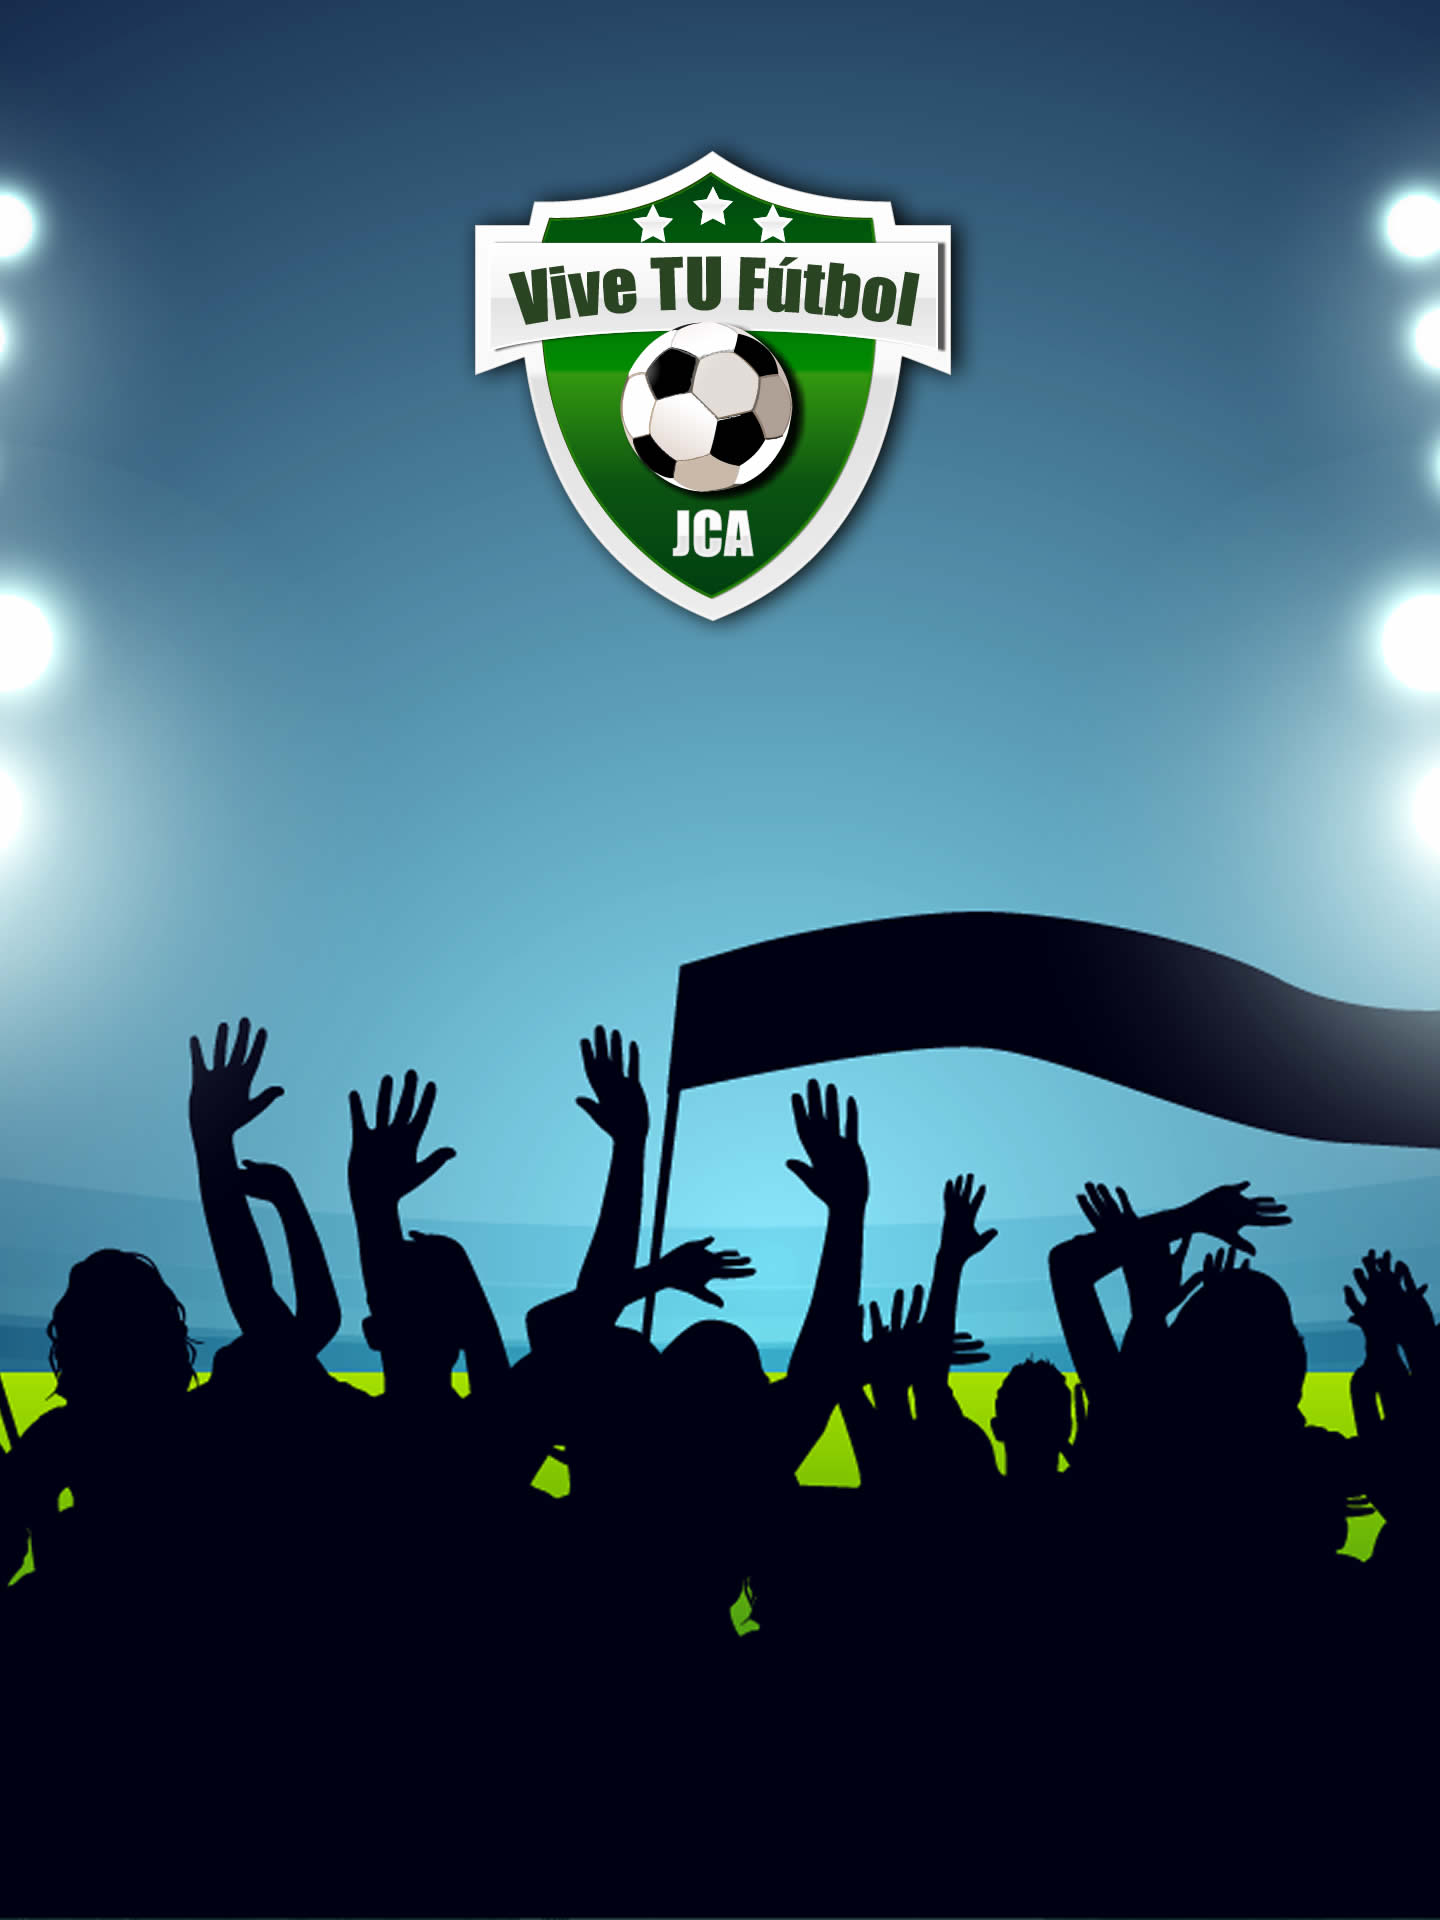 home-4-1 Vive Tu Fútbol